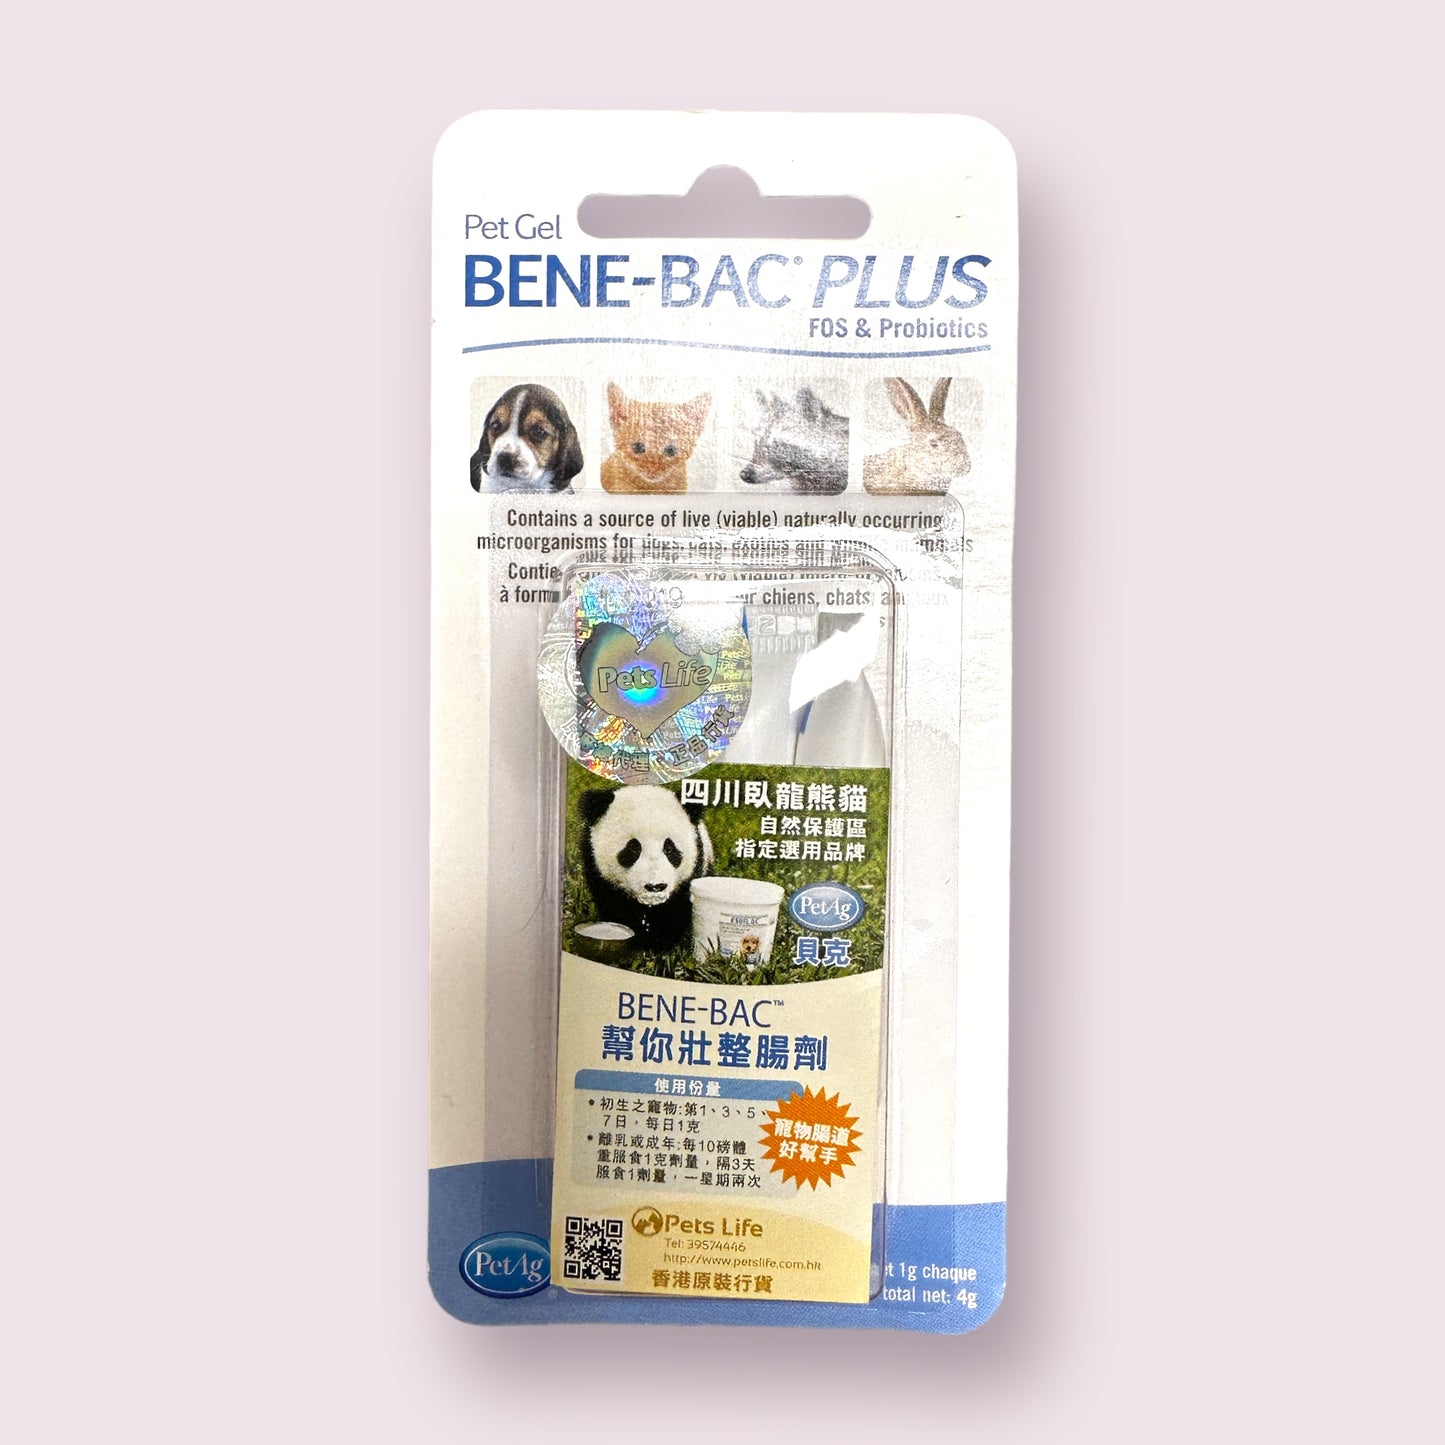 Been- Bac Plus 保護腸胃益新菌寵物凝膠